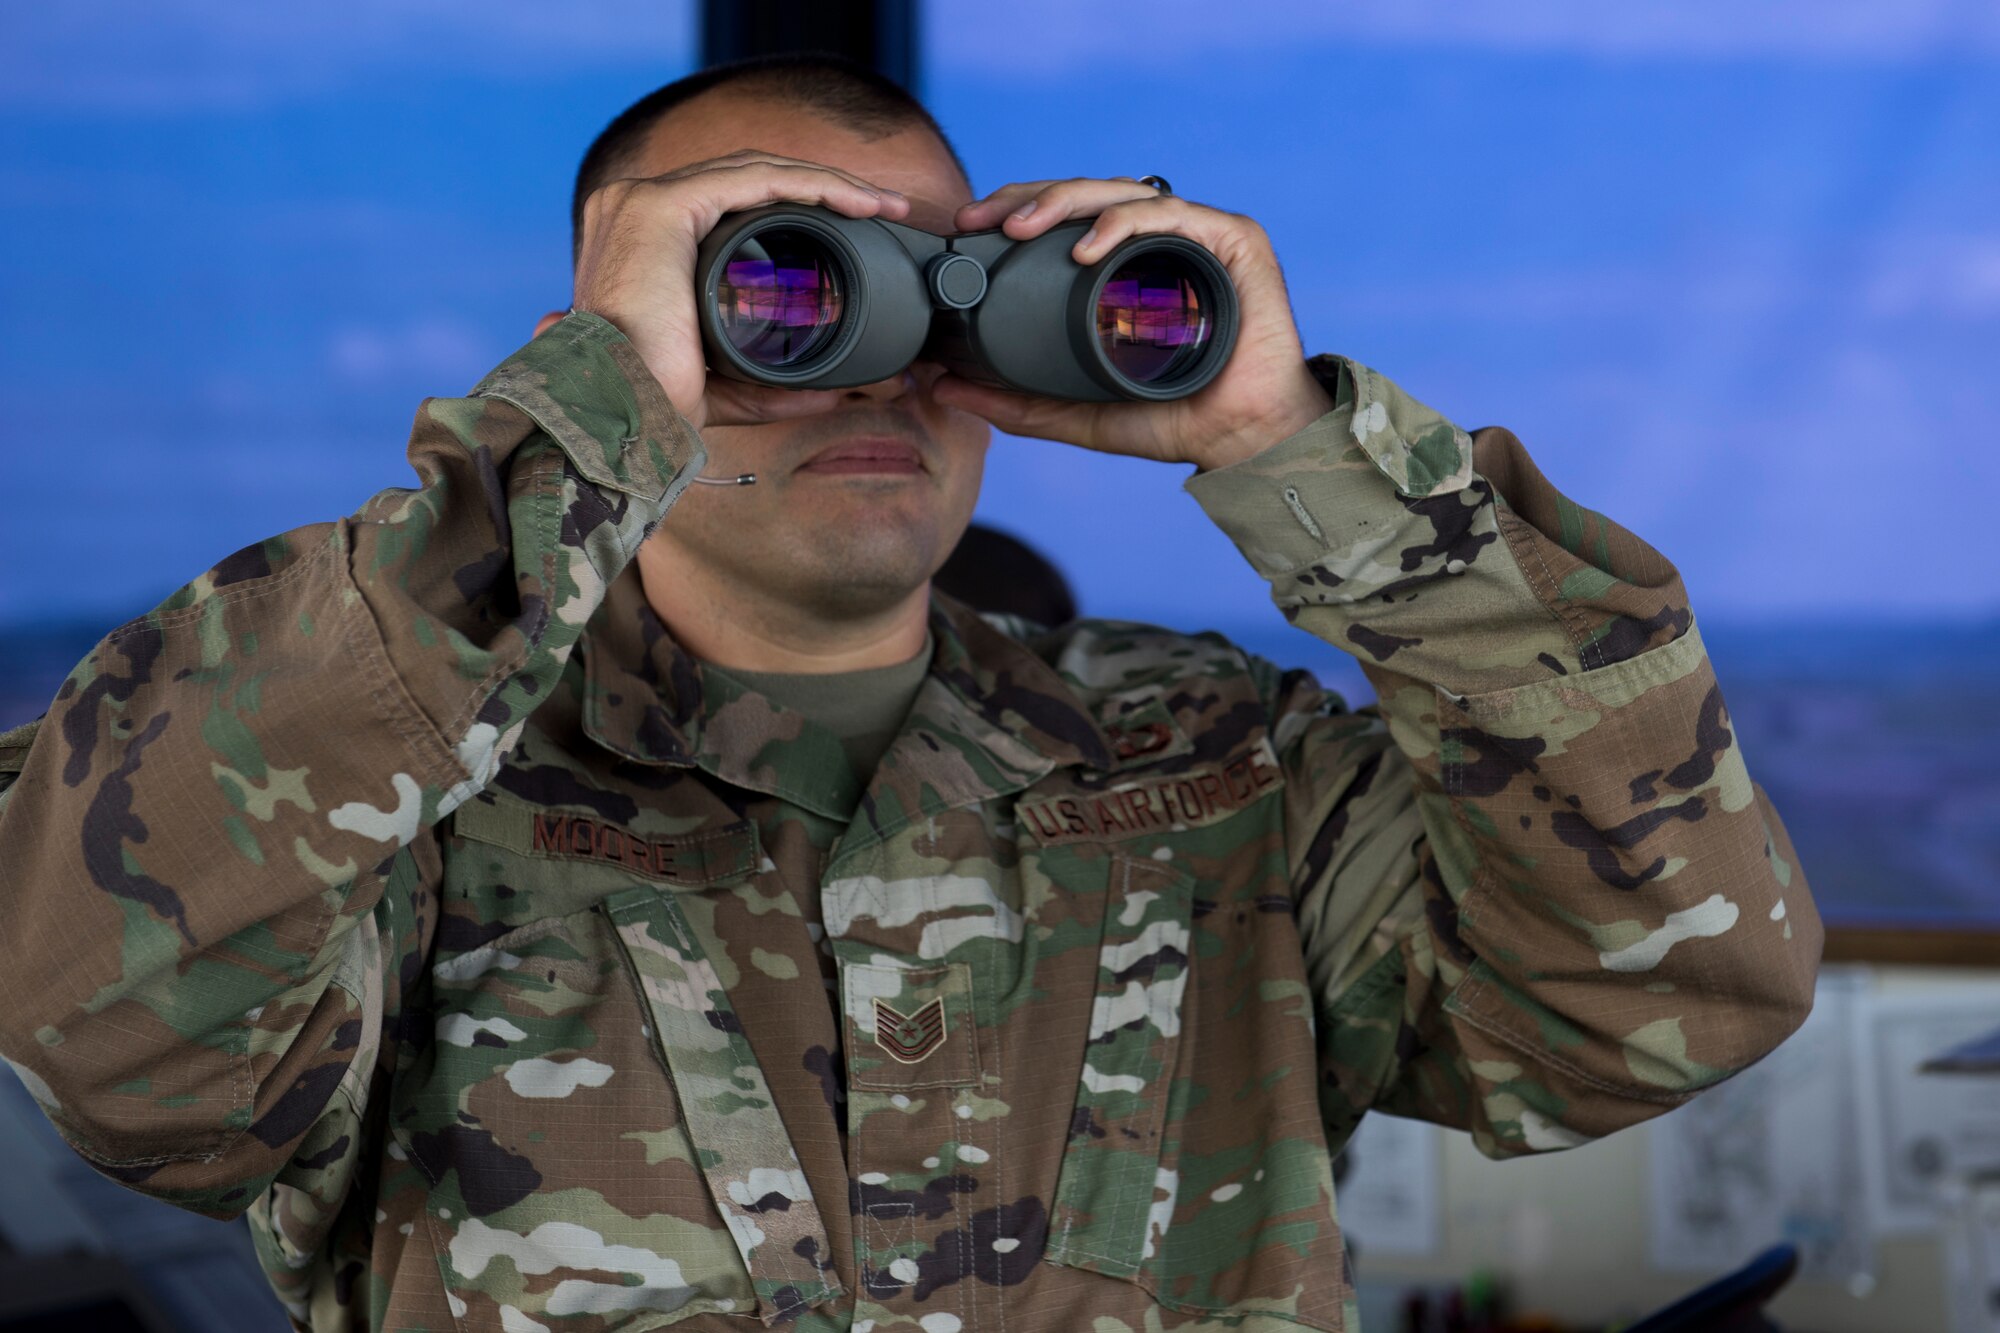 A photo of an Airman looking through binoculars